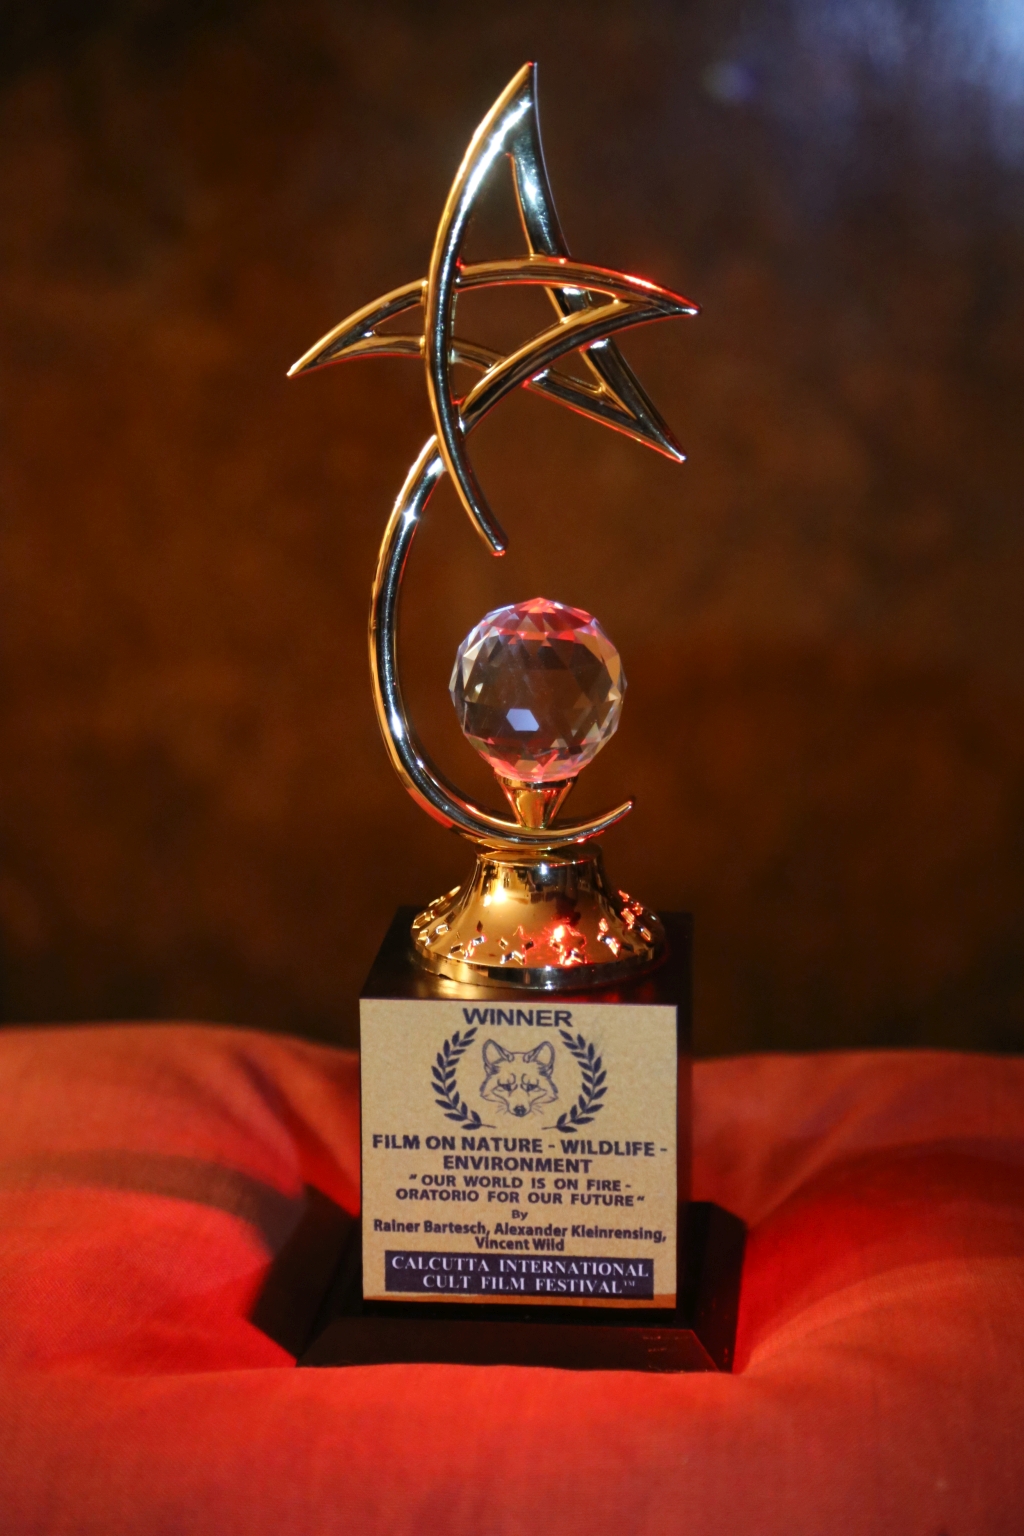 Winner - Calcutta International Cult Film Festival